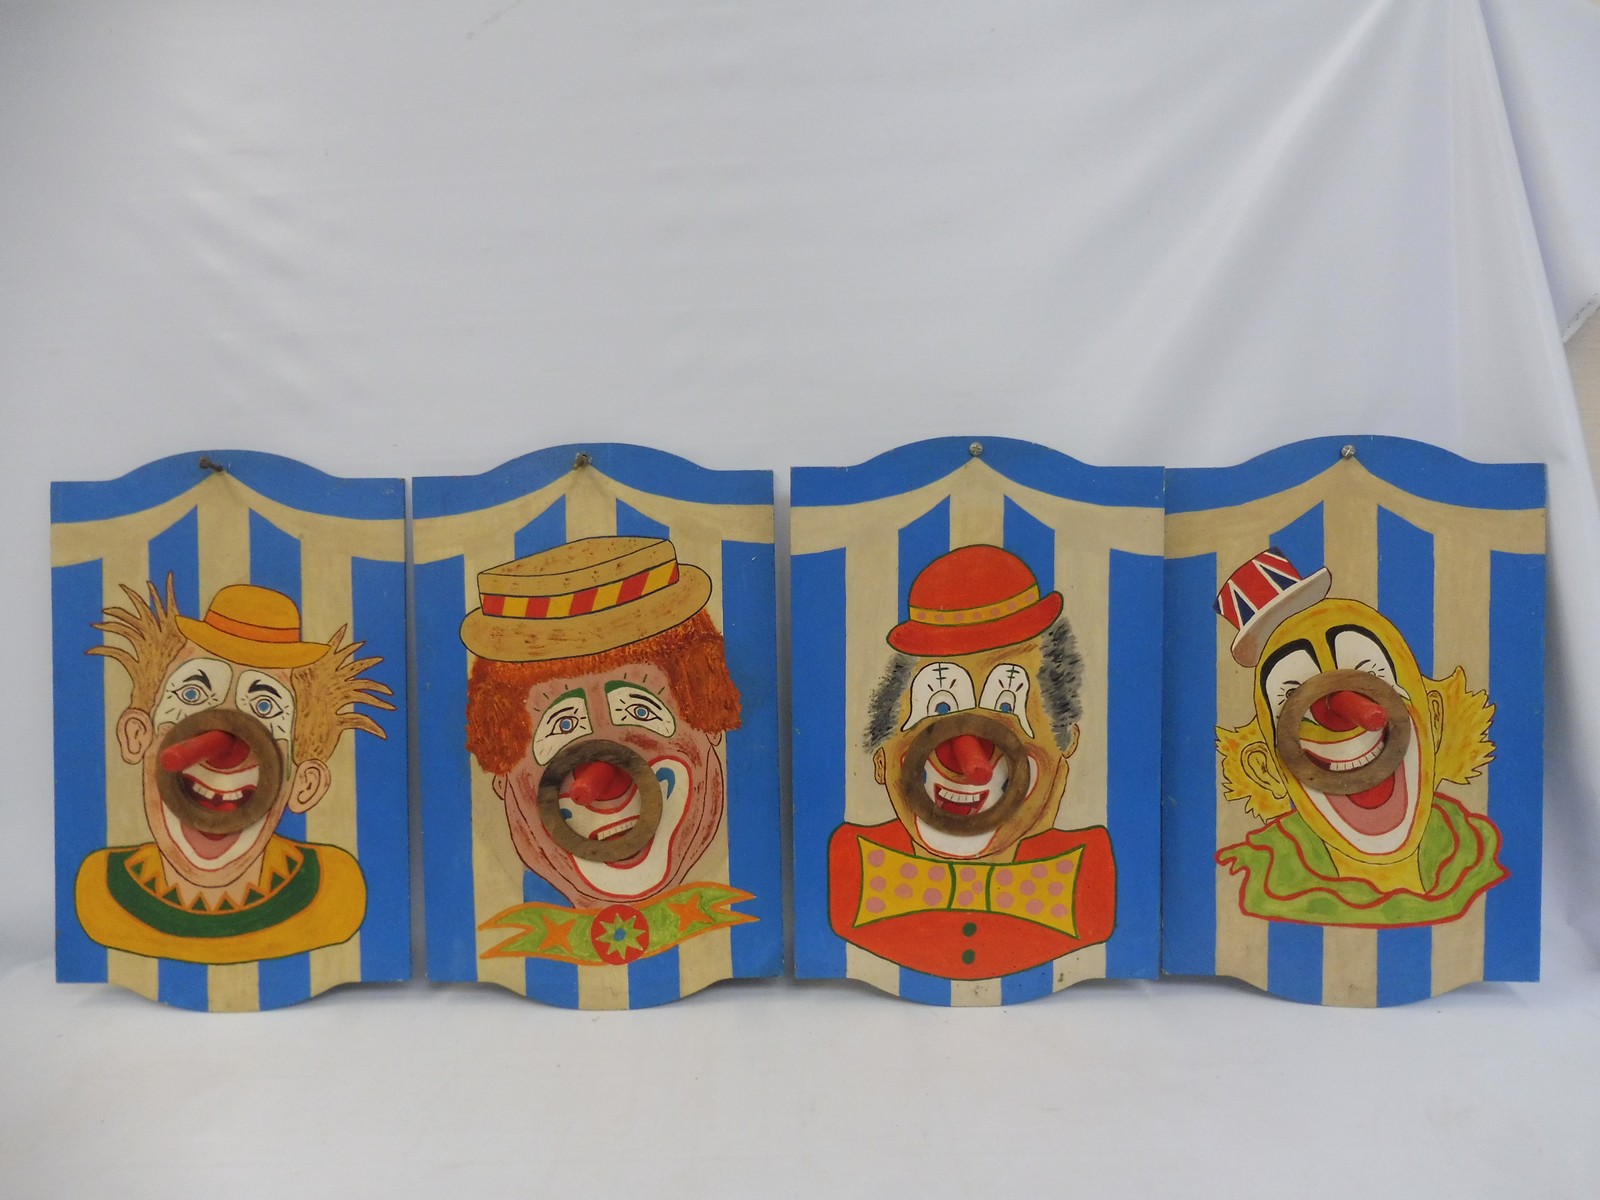 Four fairground clown hoopla boards, original artwork.